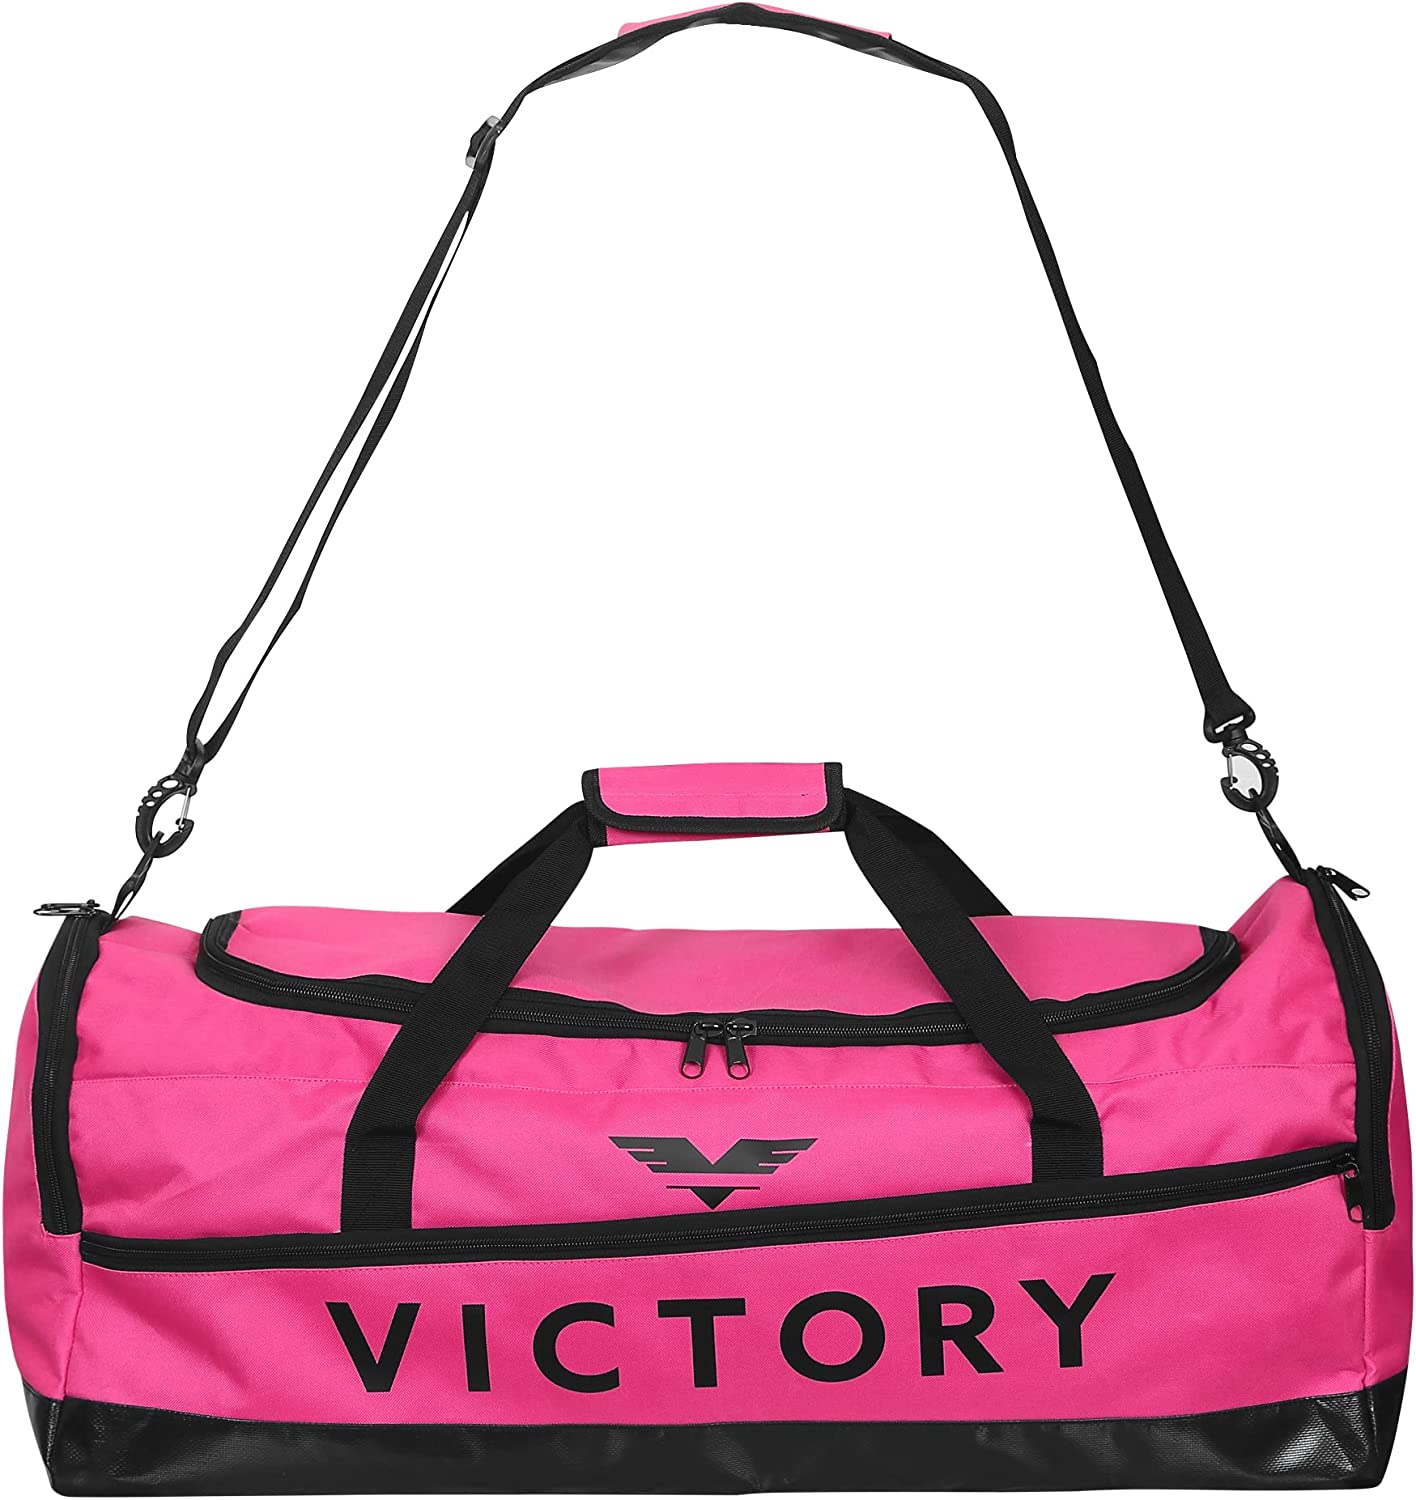 DALIX Signature Travel or Gym Duffle Bag in Pink - Walmart.com